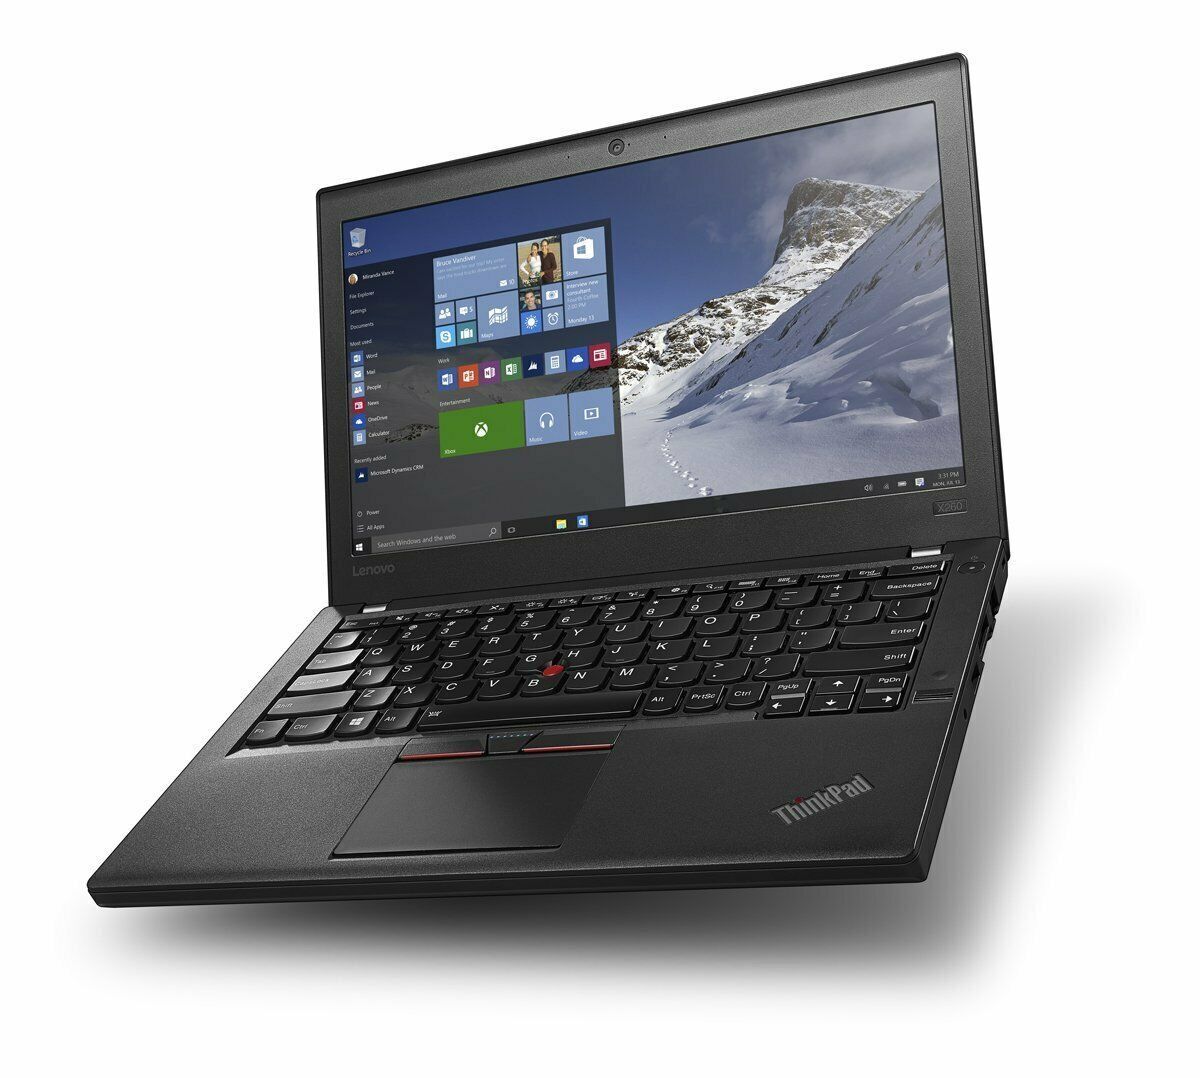 Lenovo ThinkPad X270 Intel i5 7200U 2.50GHz 8GB RAM 256GB SSD 12.5" Win 10 Image 1